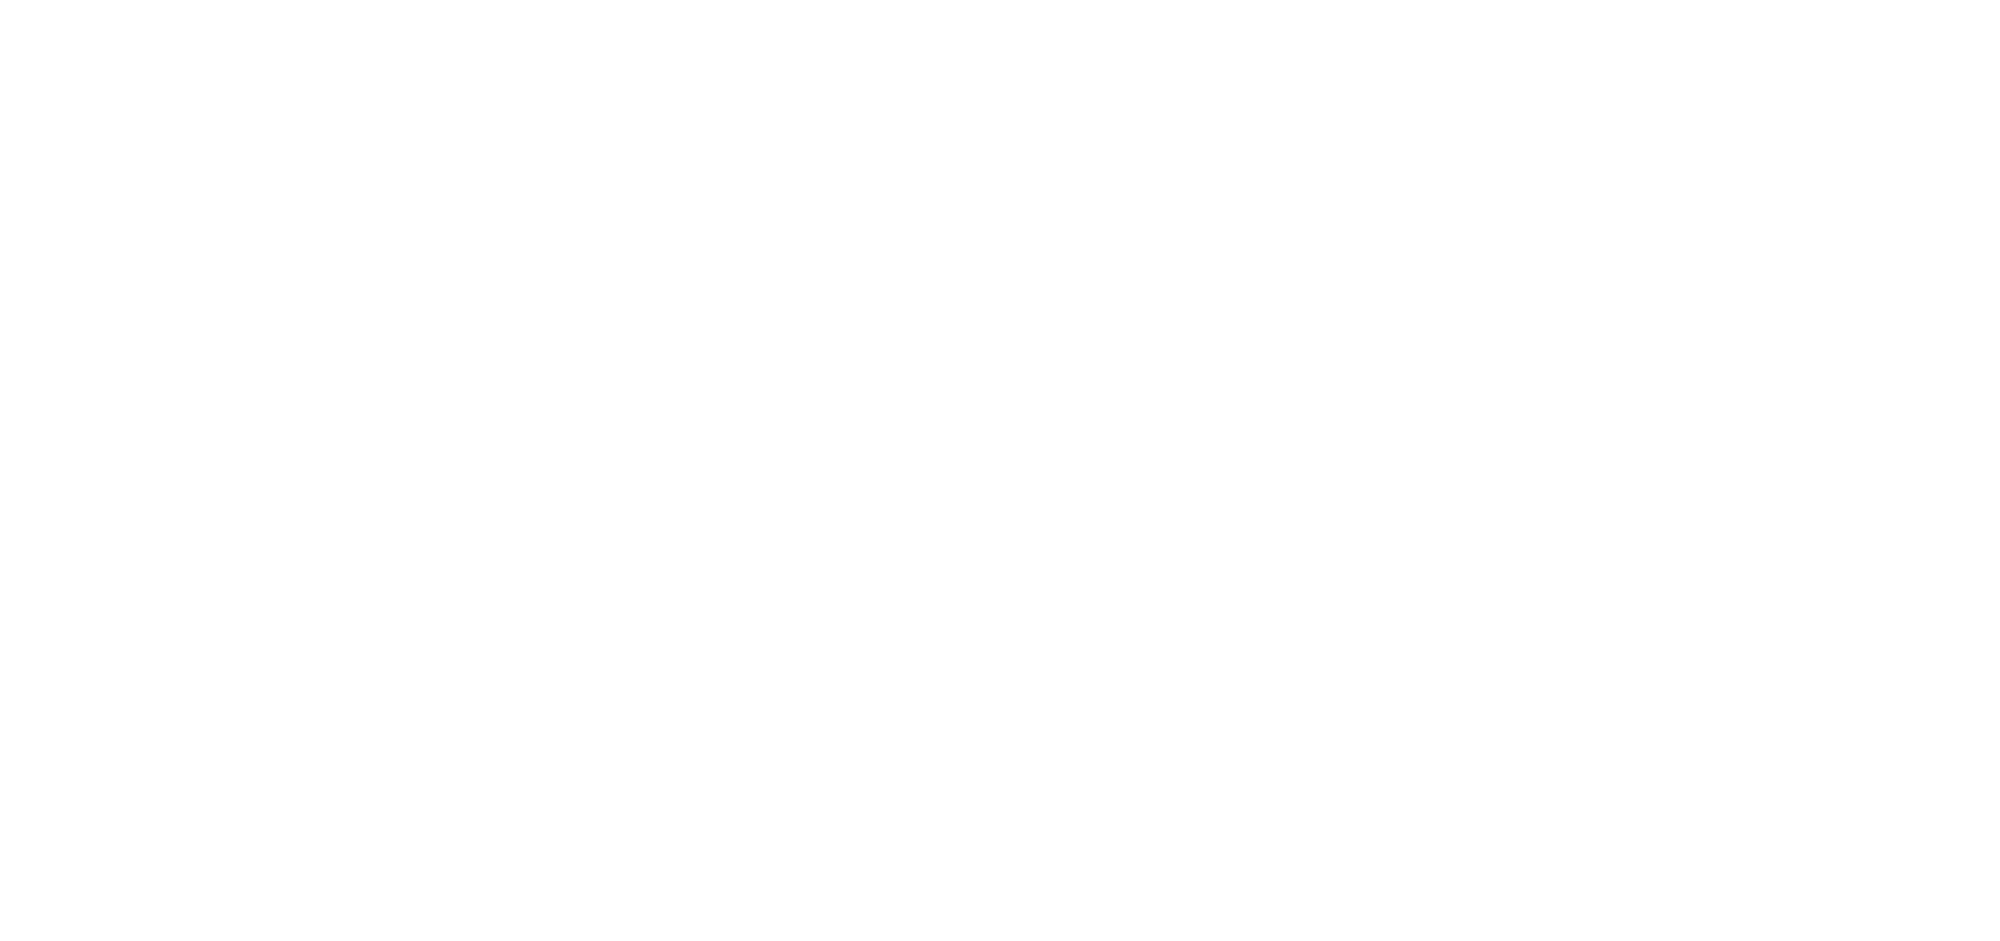 ICBA Open Data Portal